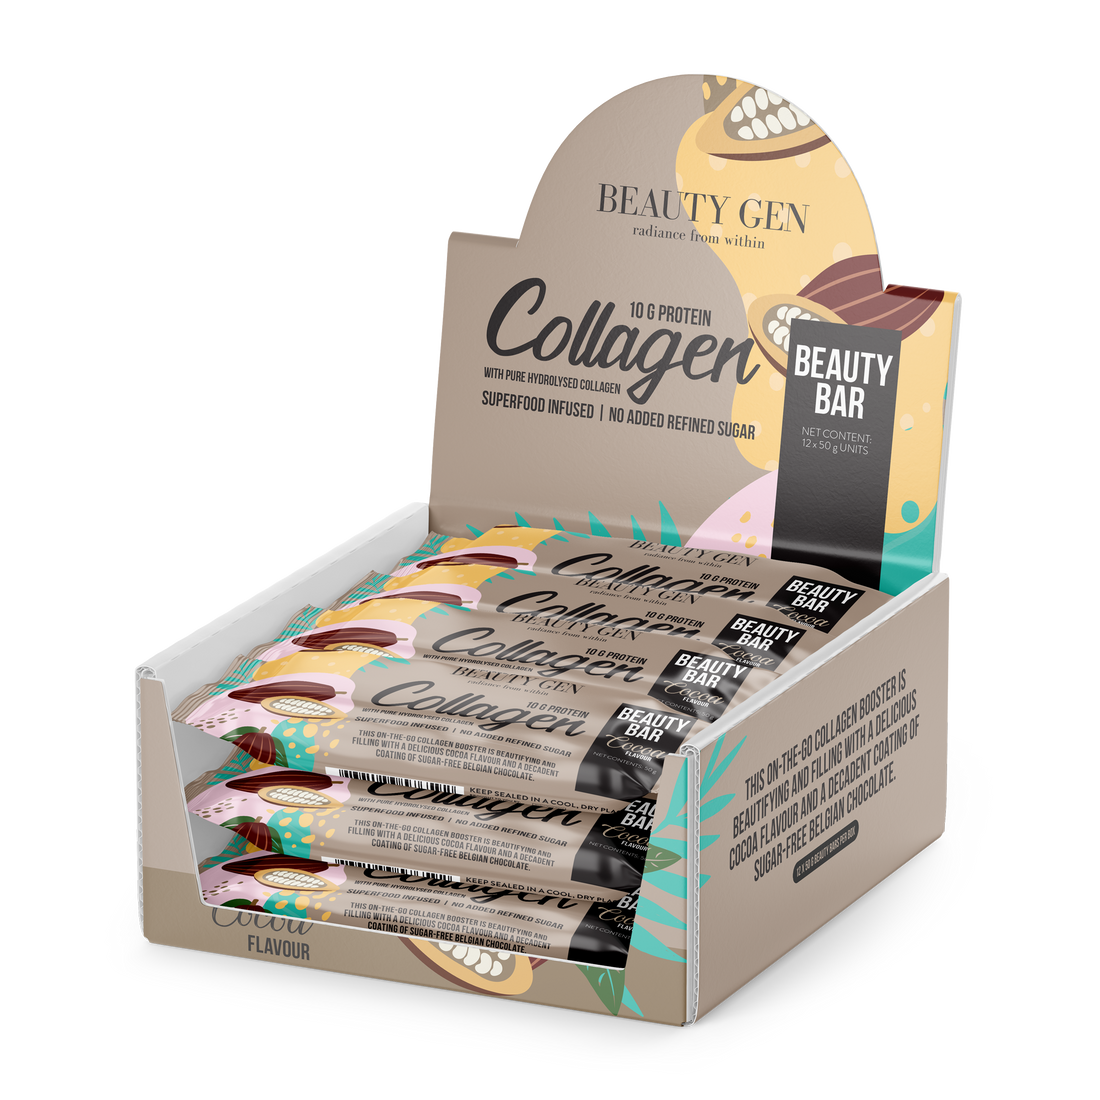 eauty Gen Beauty Collagen Bar Cacao Box